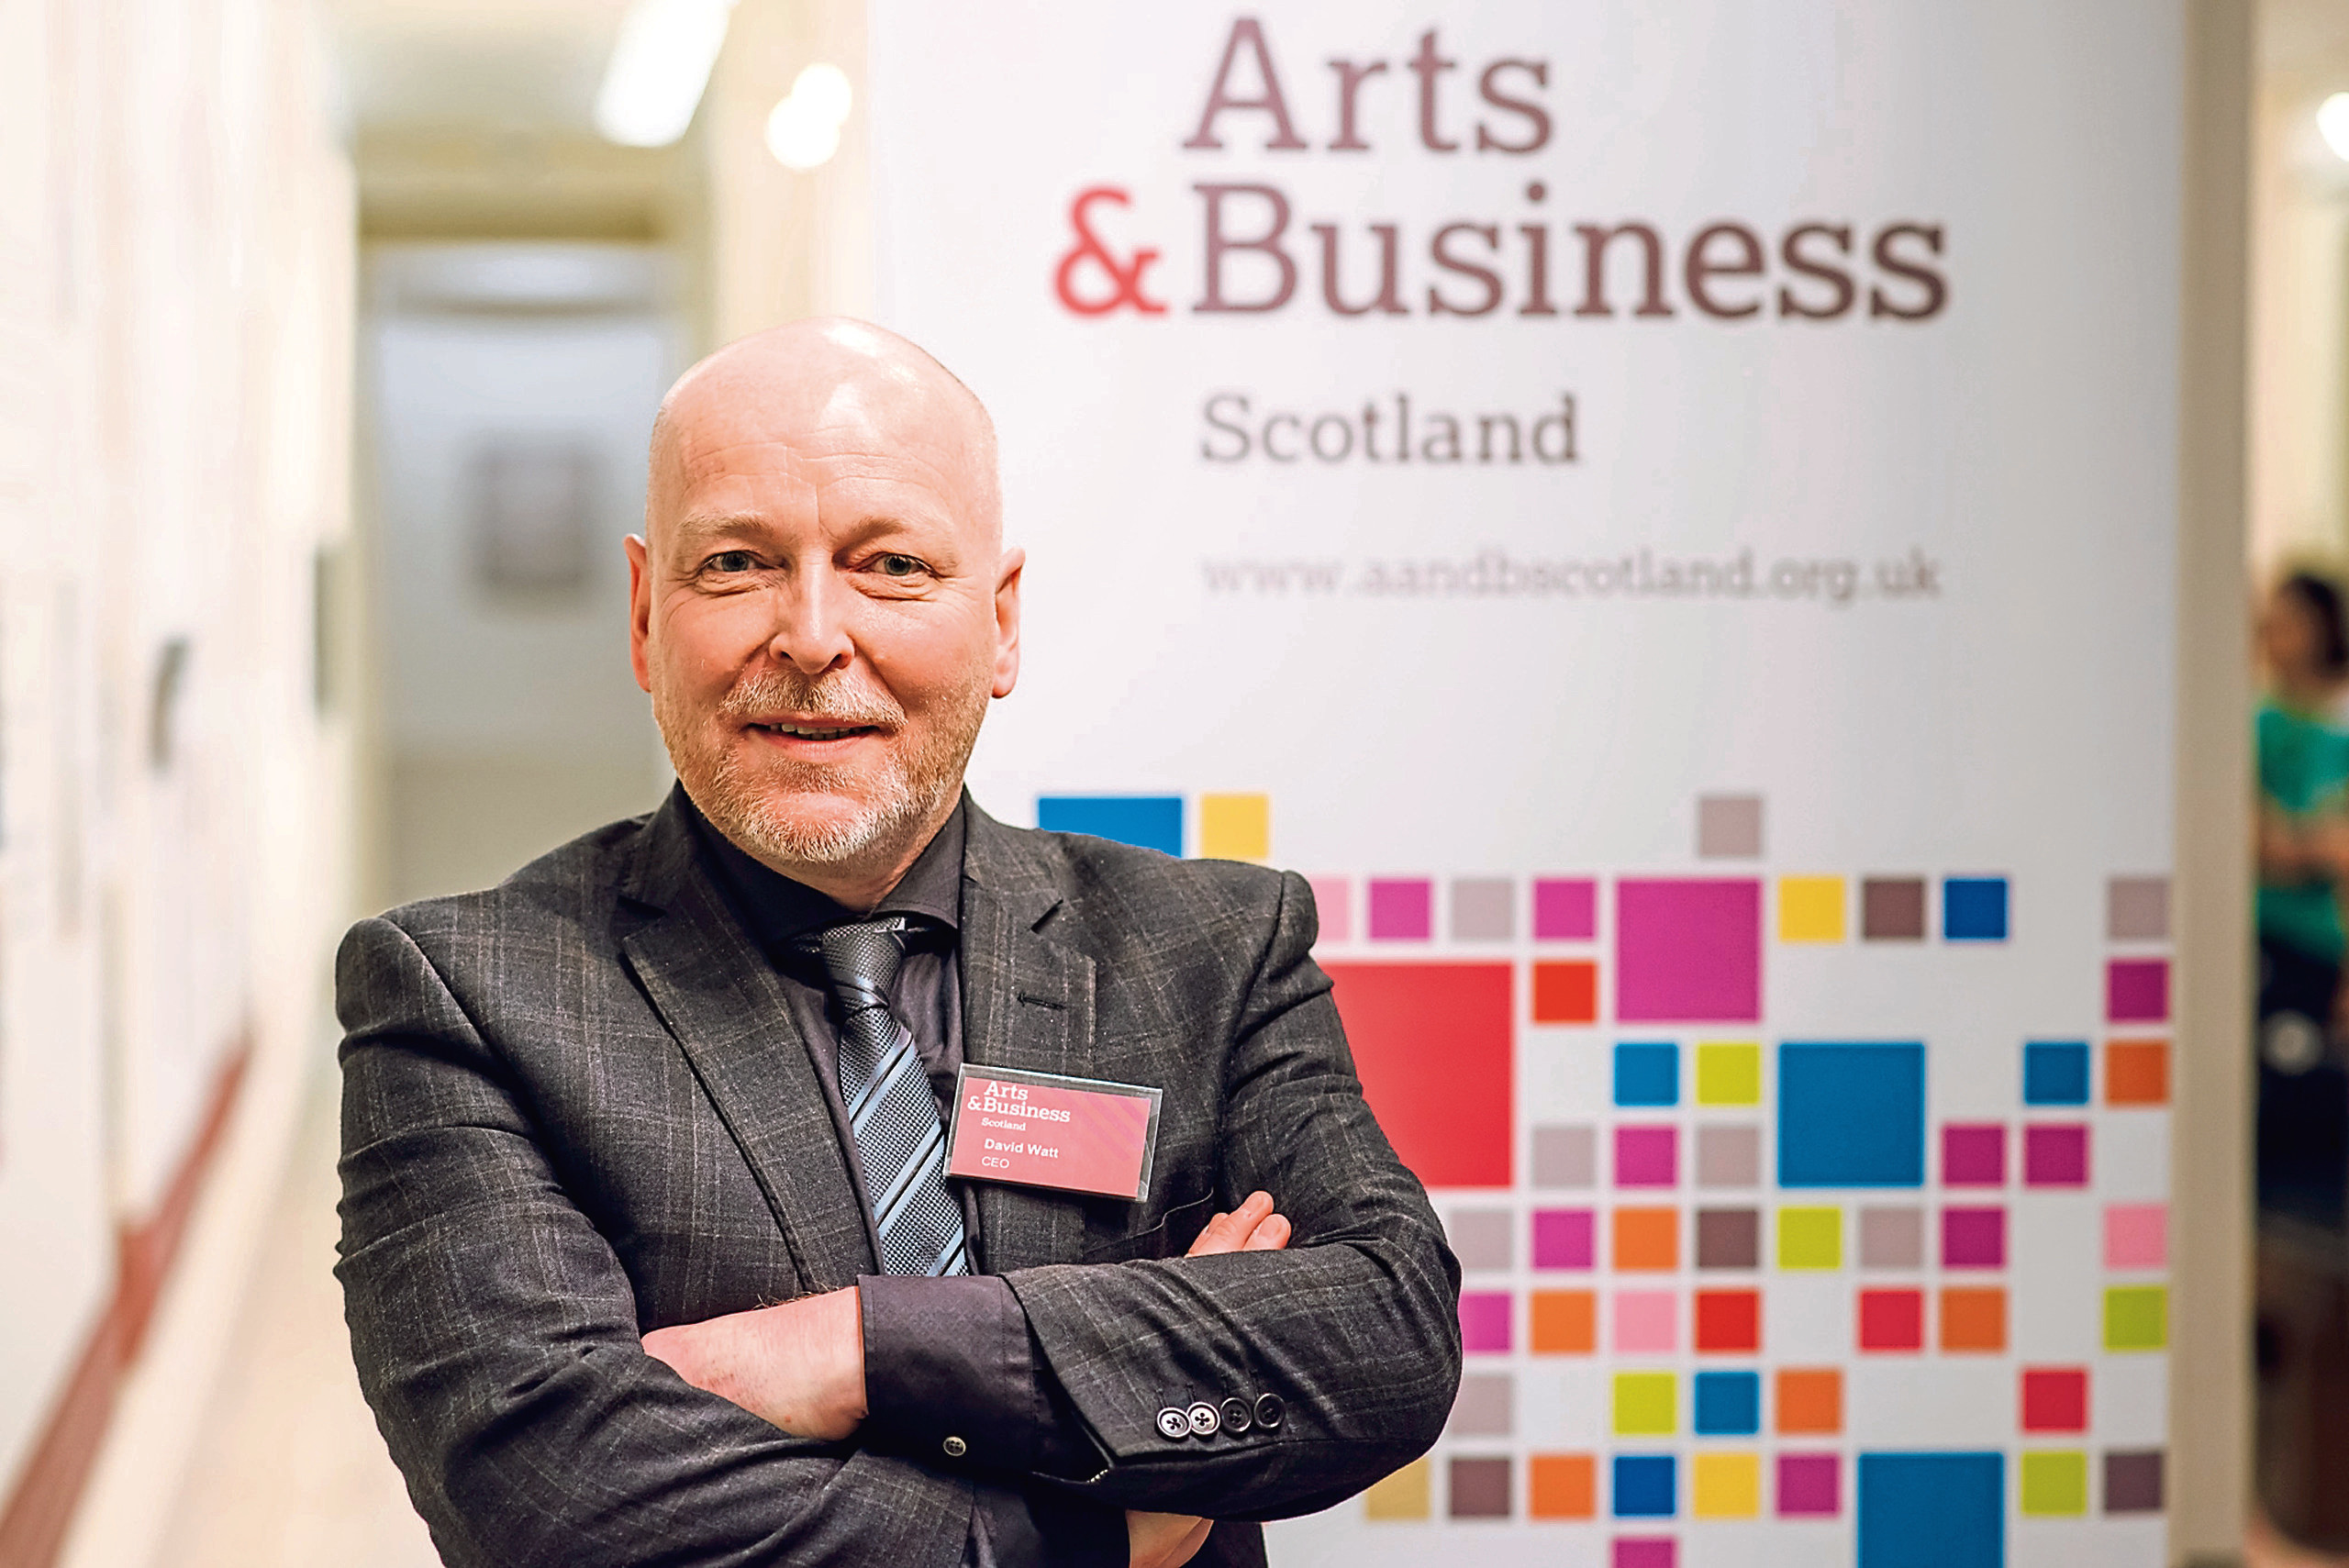 David Watt, chief executive of Arts & Business Scotland